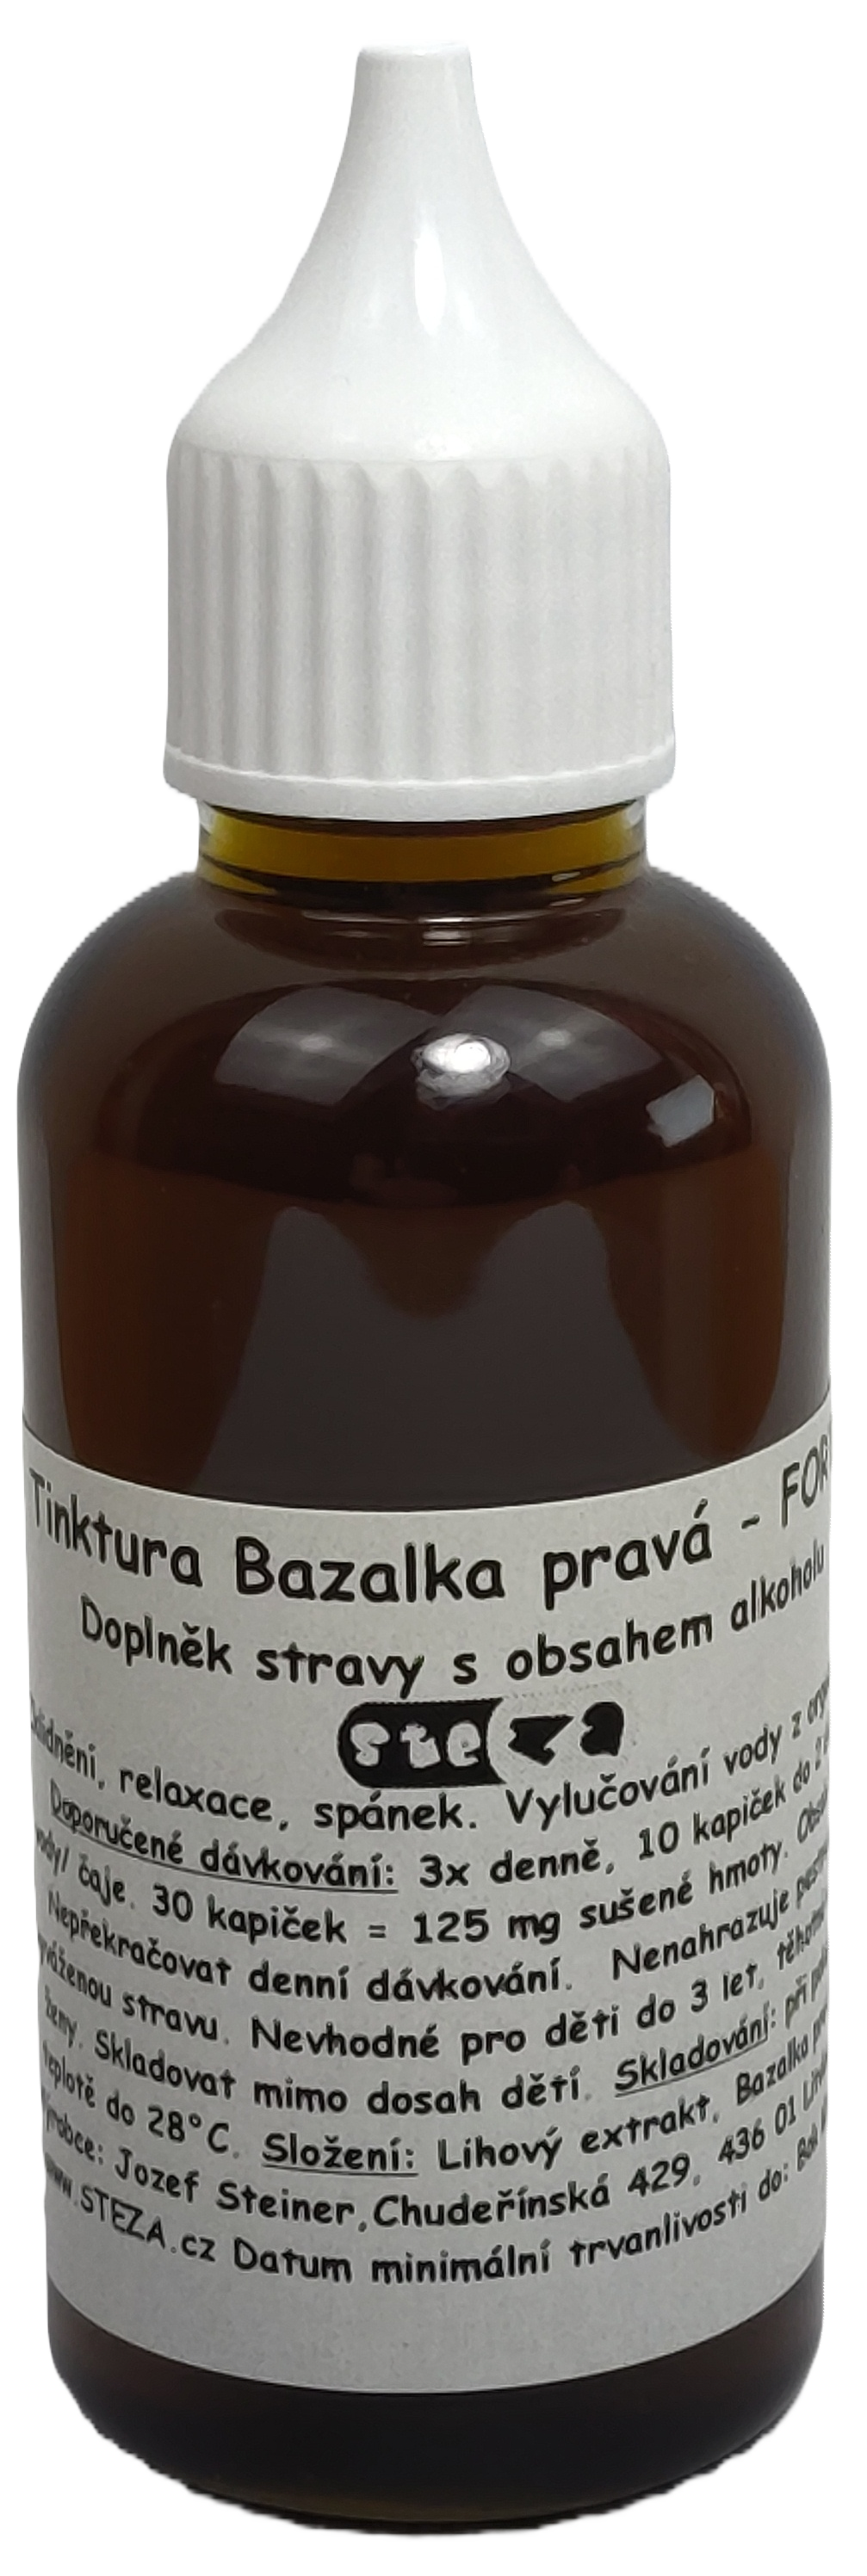 STEZA - Tinktura Bazalka pravá - FORTE 3x 50 ml. (Bazalková tinktura)